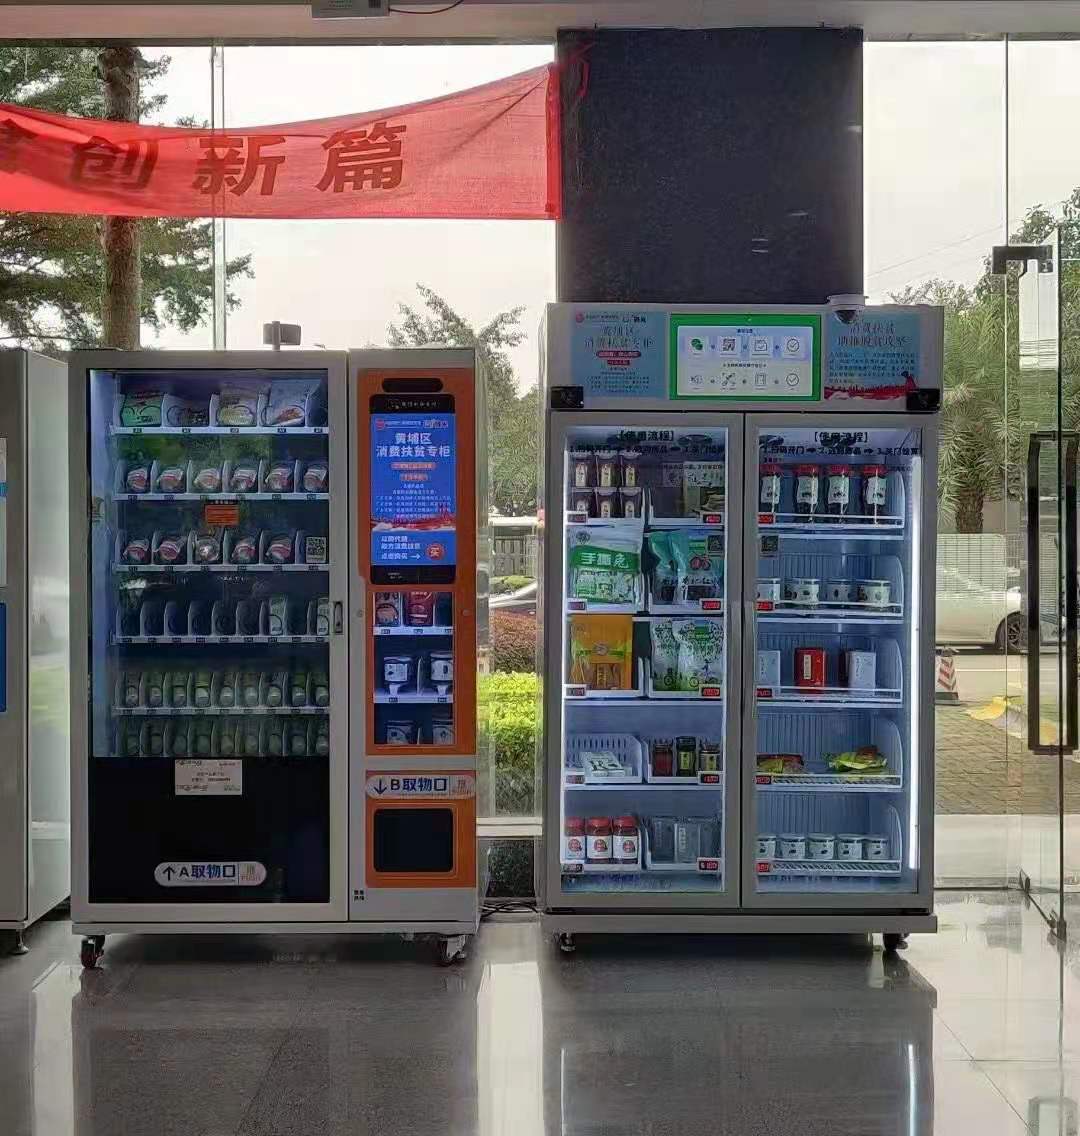 Office vending machine how to make money?